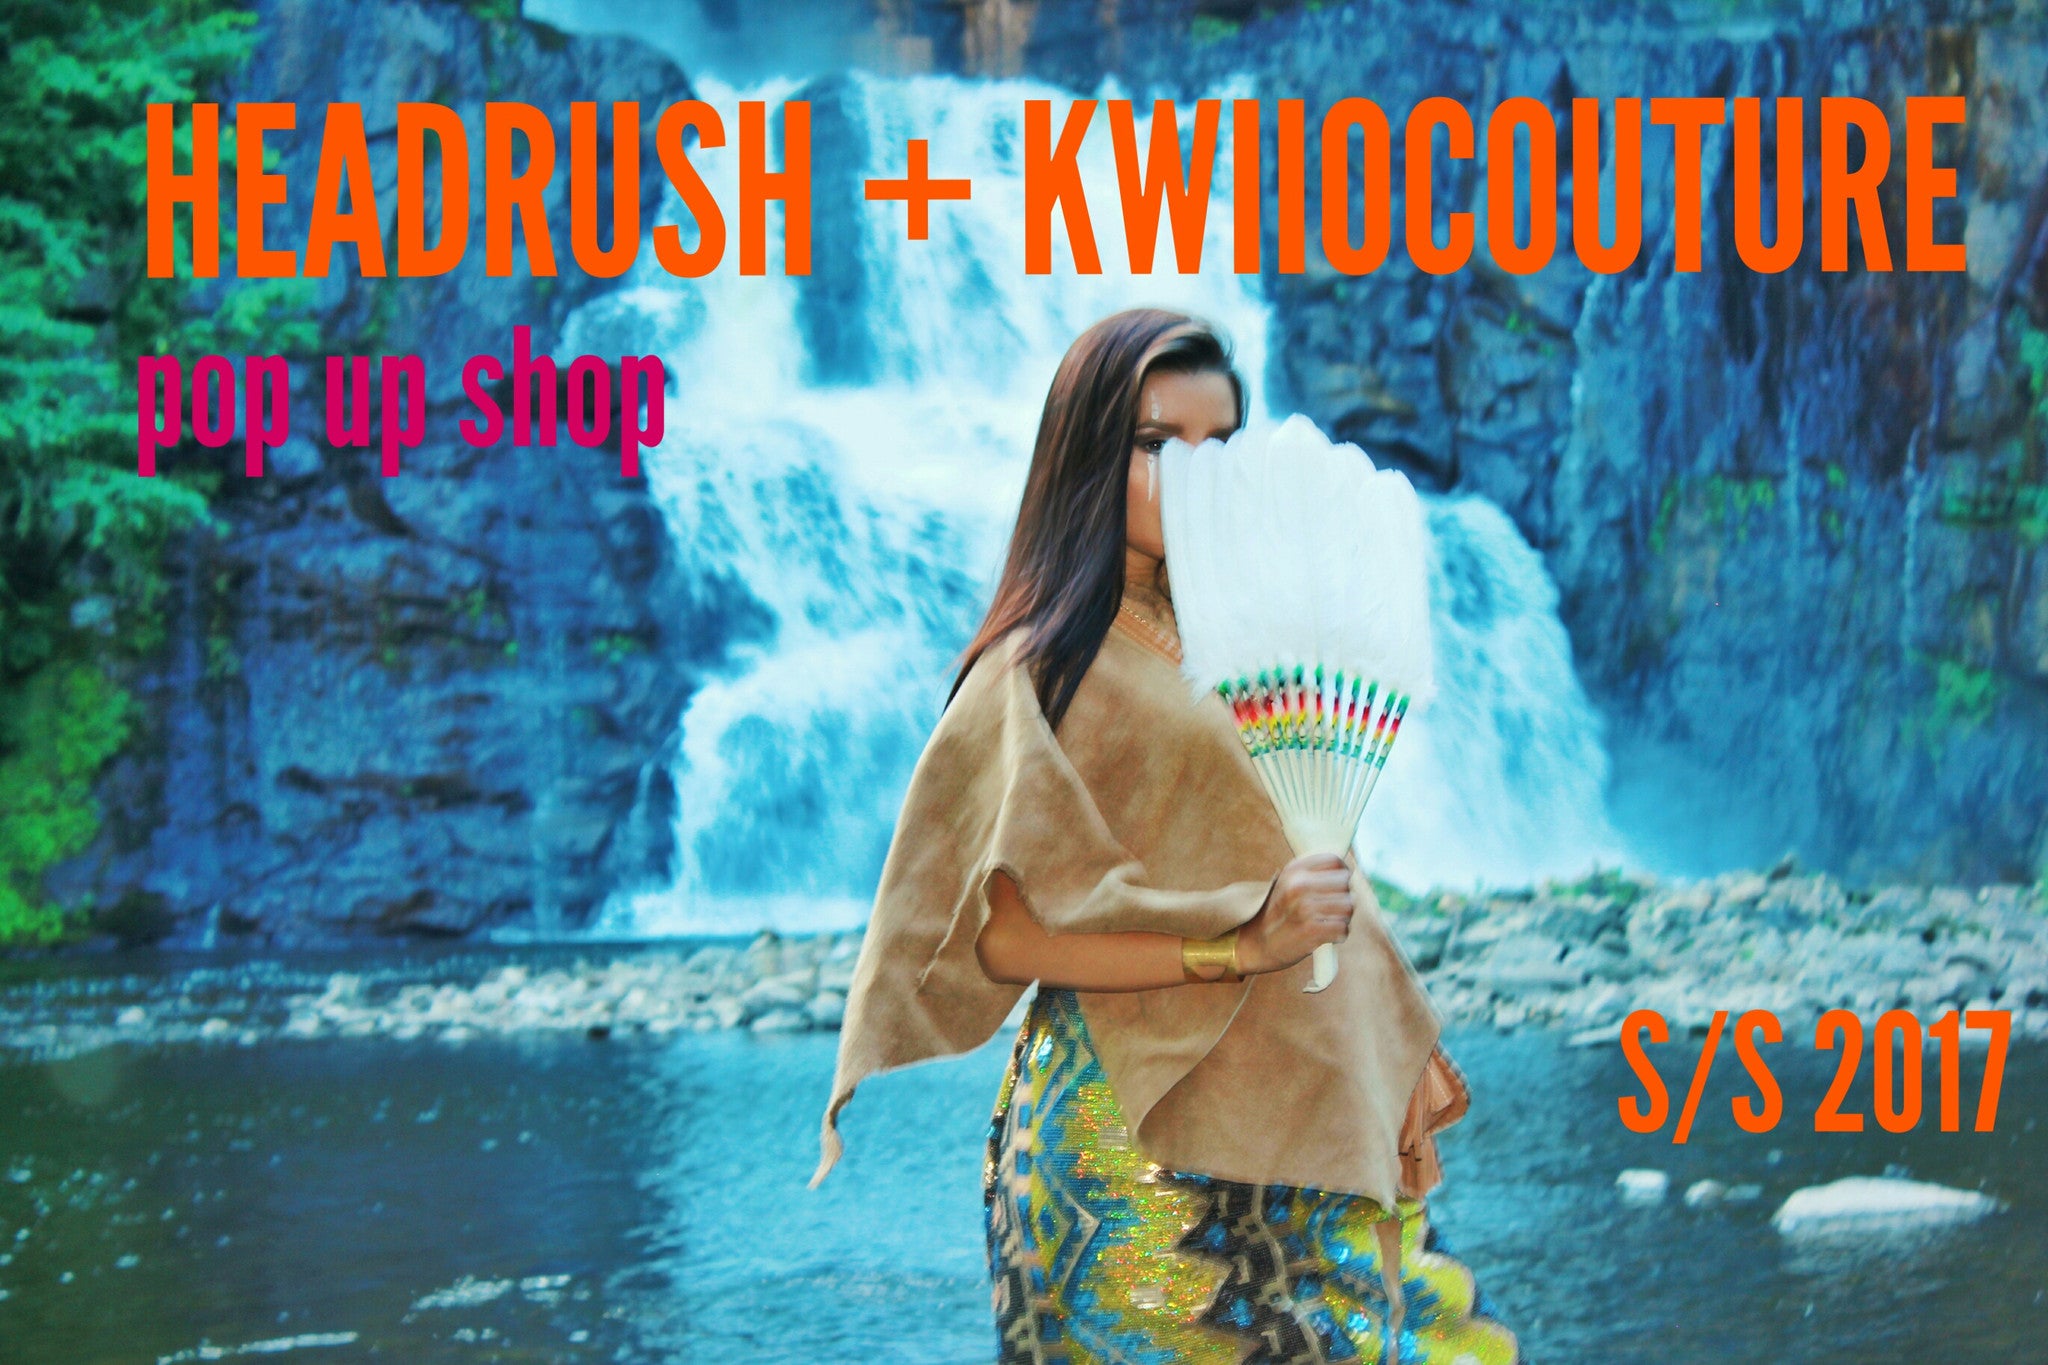 MohawkCoterie presents HeadRush Brand + KwiioCouture